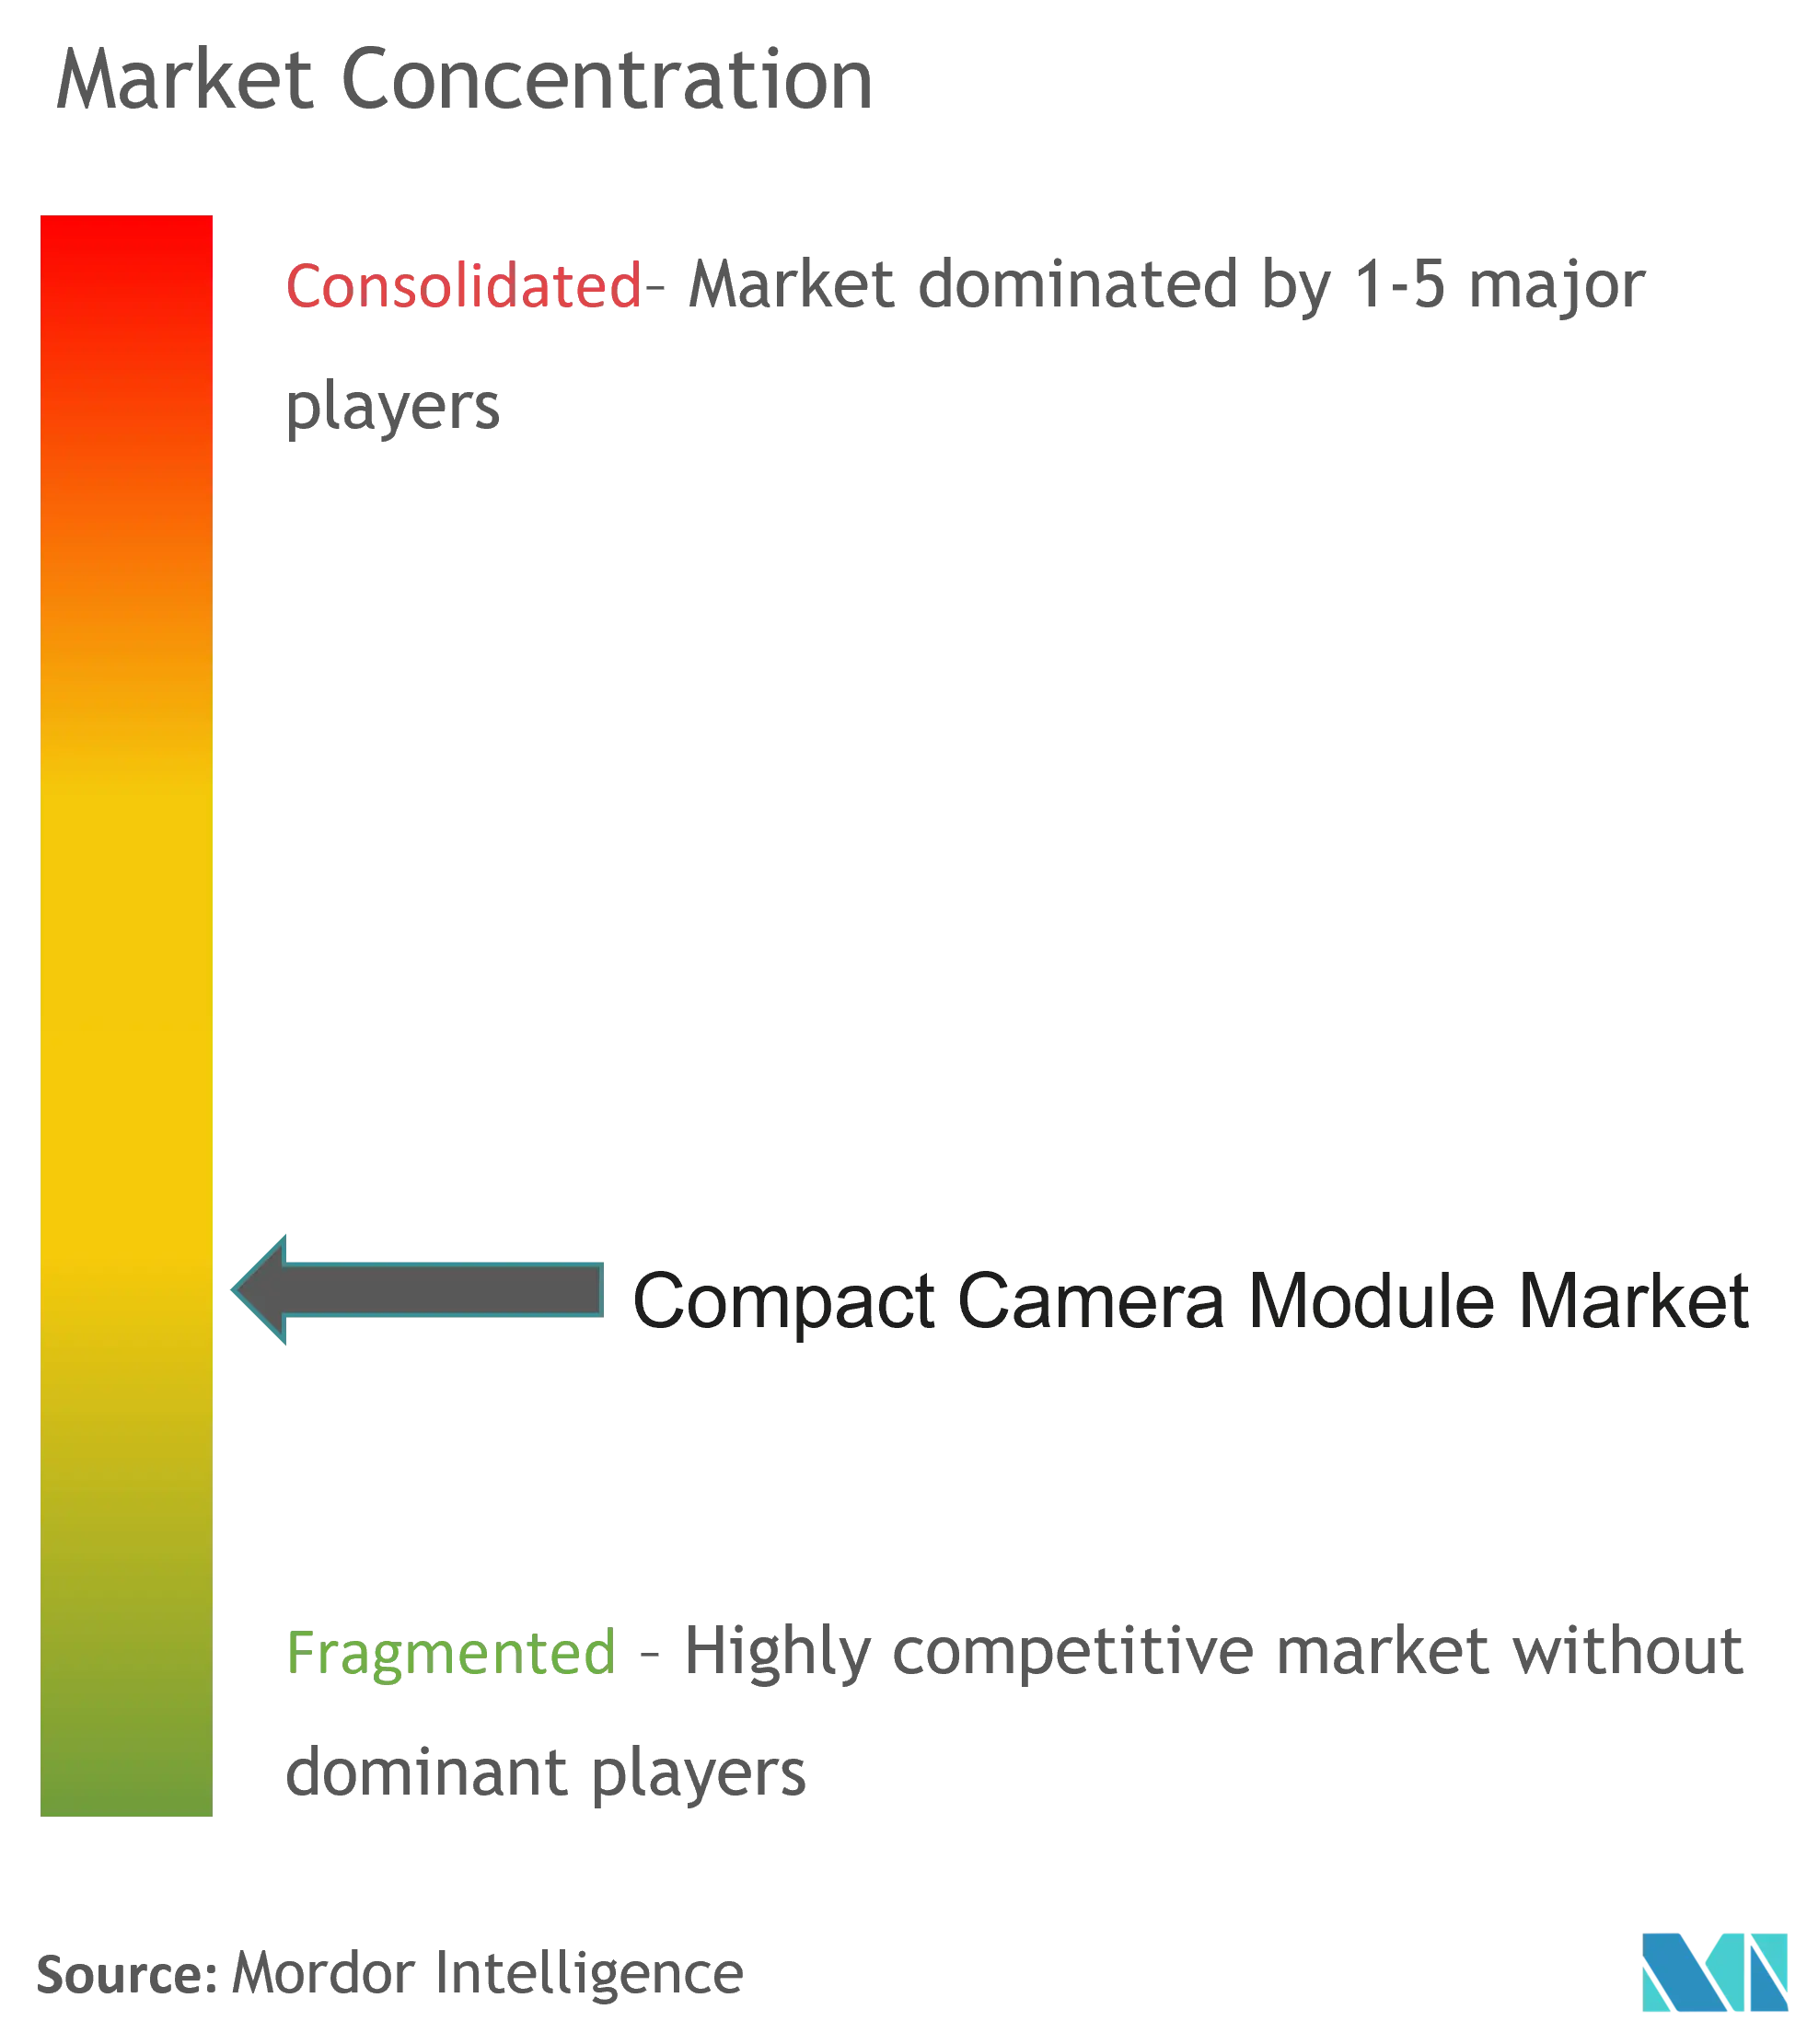 Compact Camera Module Market - Market Concentration.png